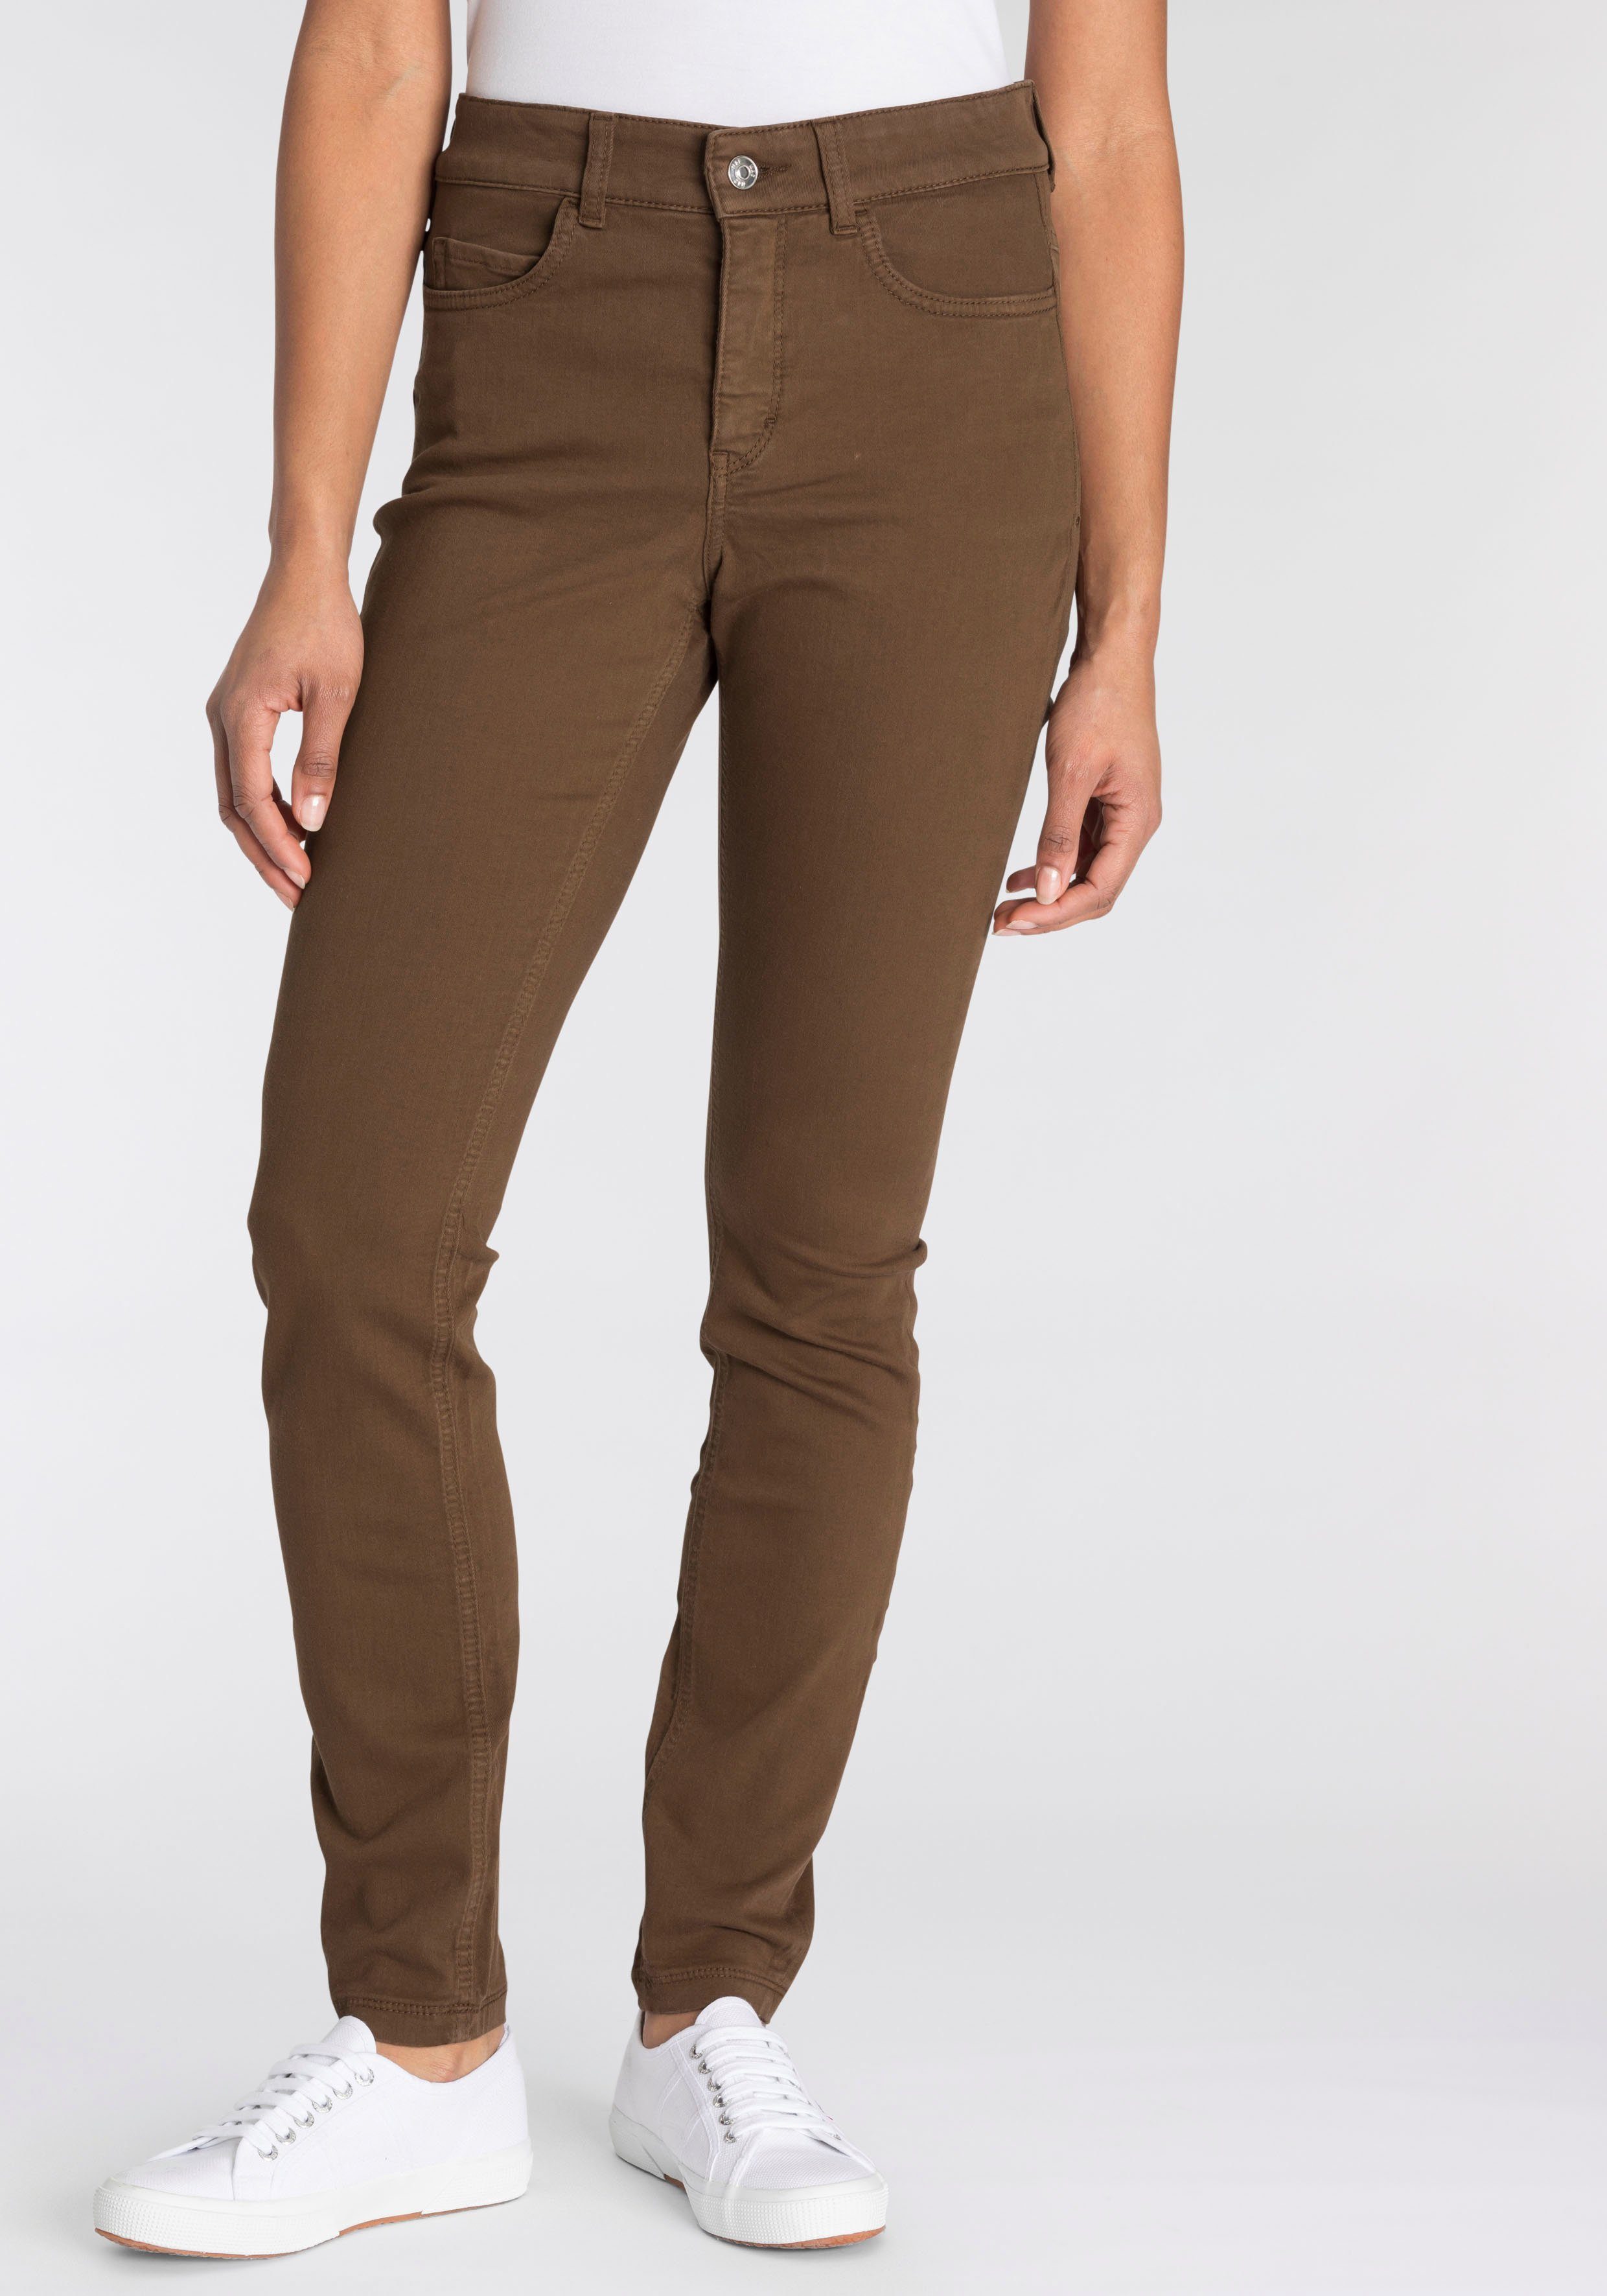 bequem Qualität Hiperstretch-Skinny brown Power-Stretch fawn Tag MAC ganzen sitzt Skinny-fit-Jeans den